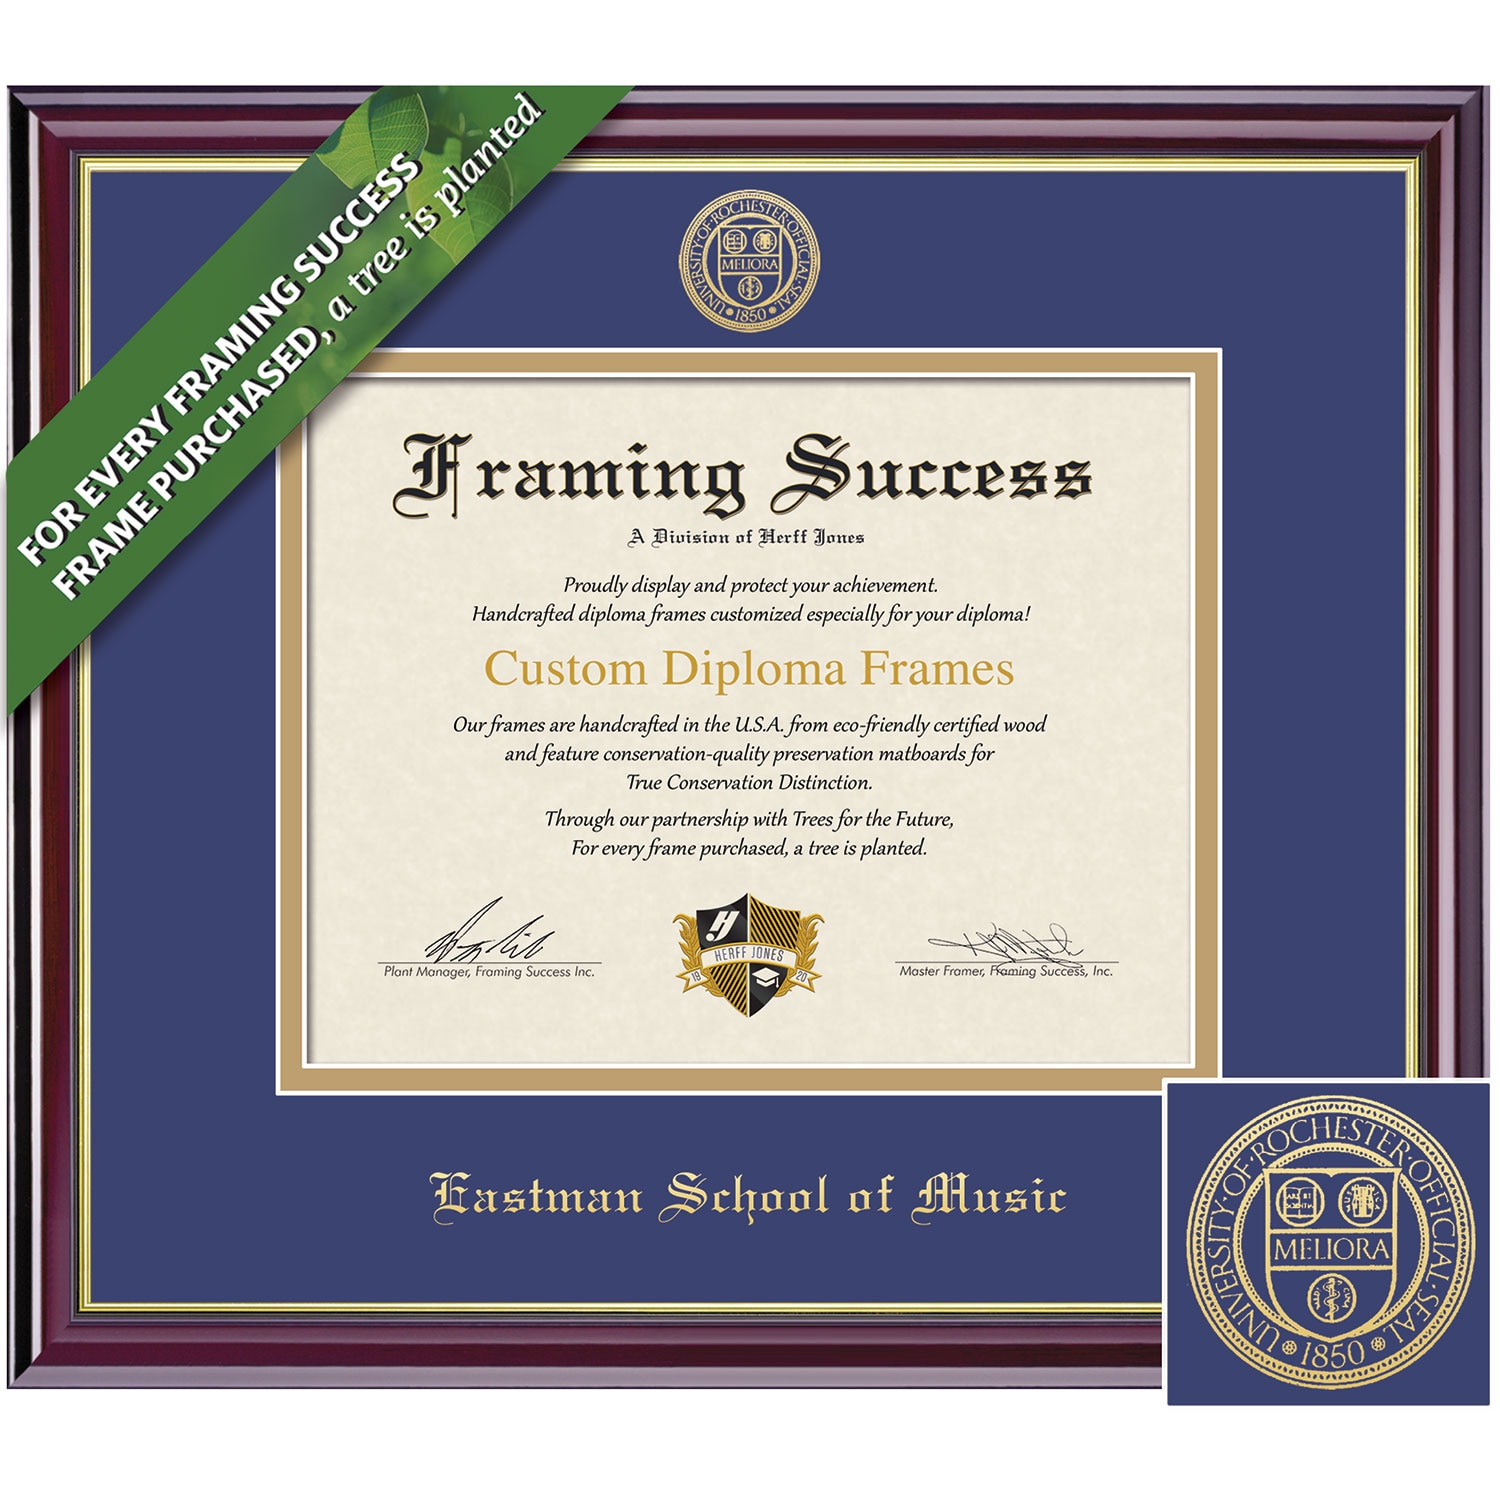 Framing Success 12 x 16 Windsor Gold Embossed School Seal PhD Diploma Frame